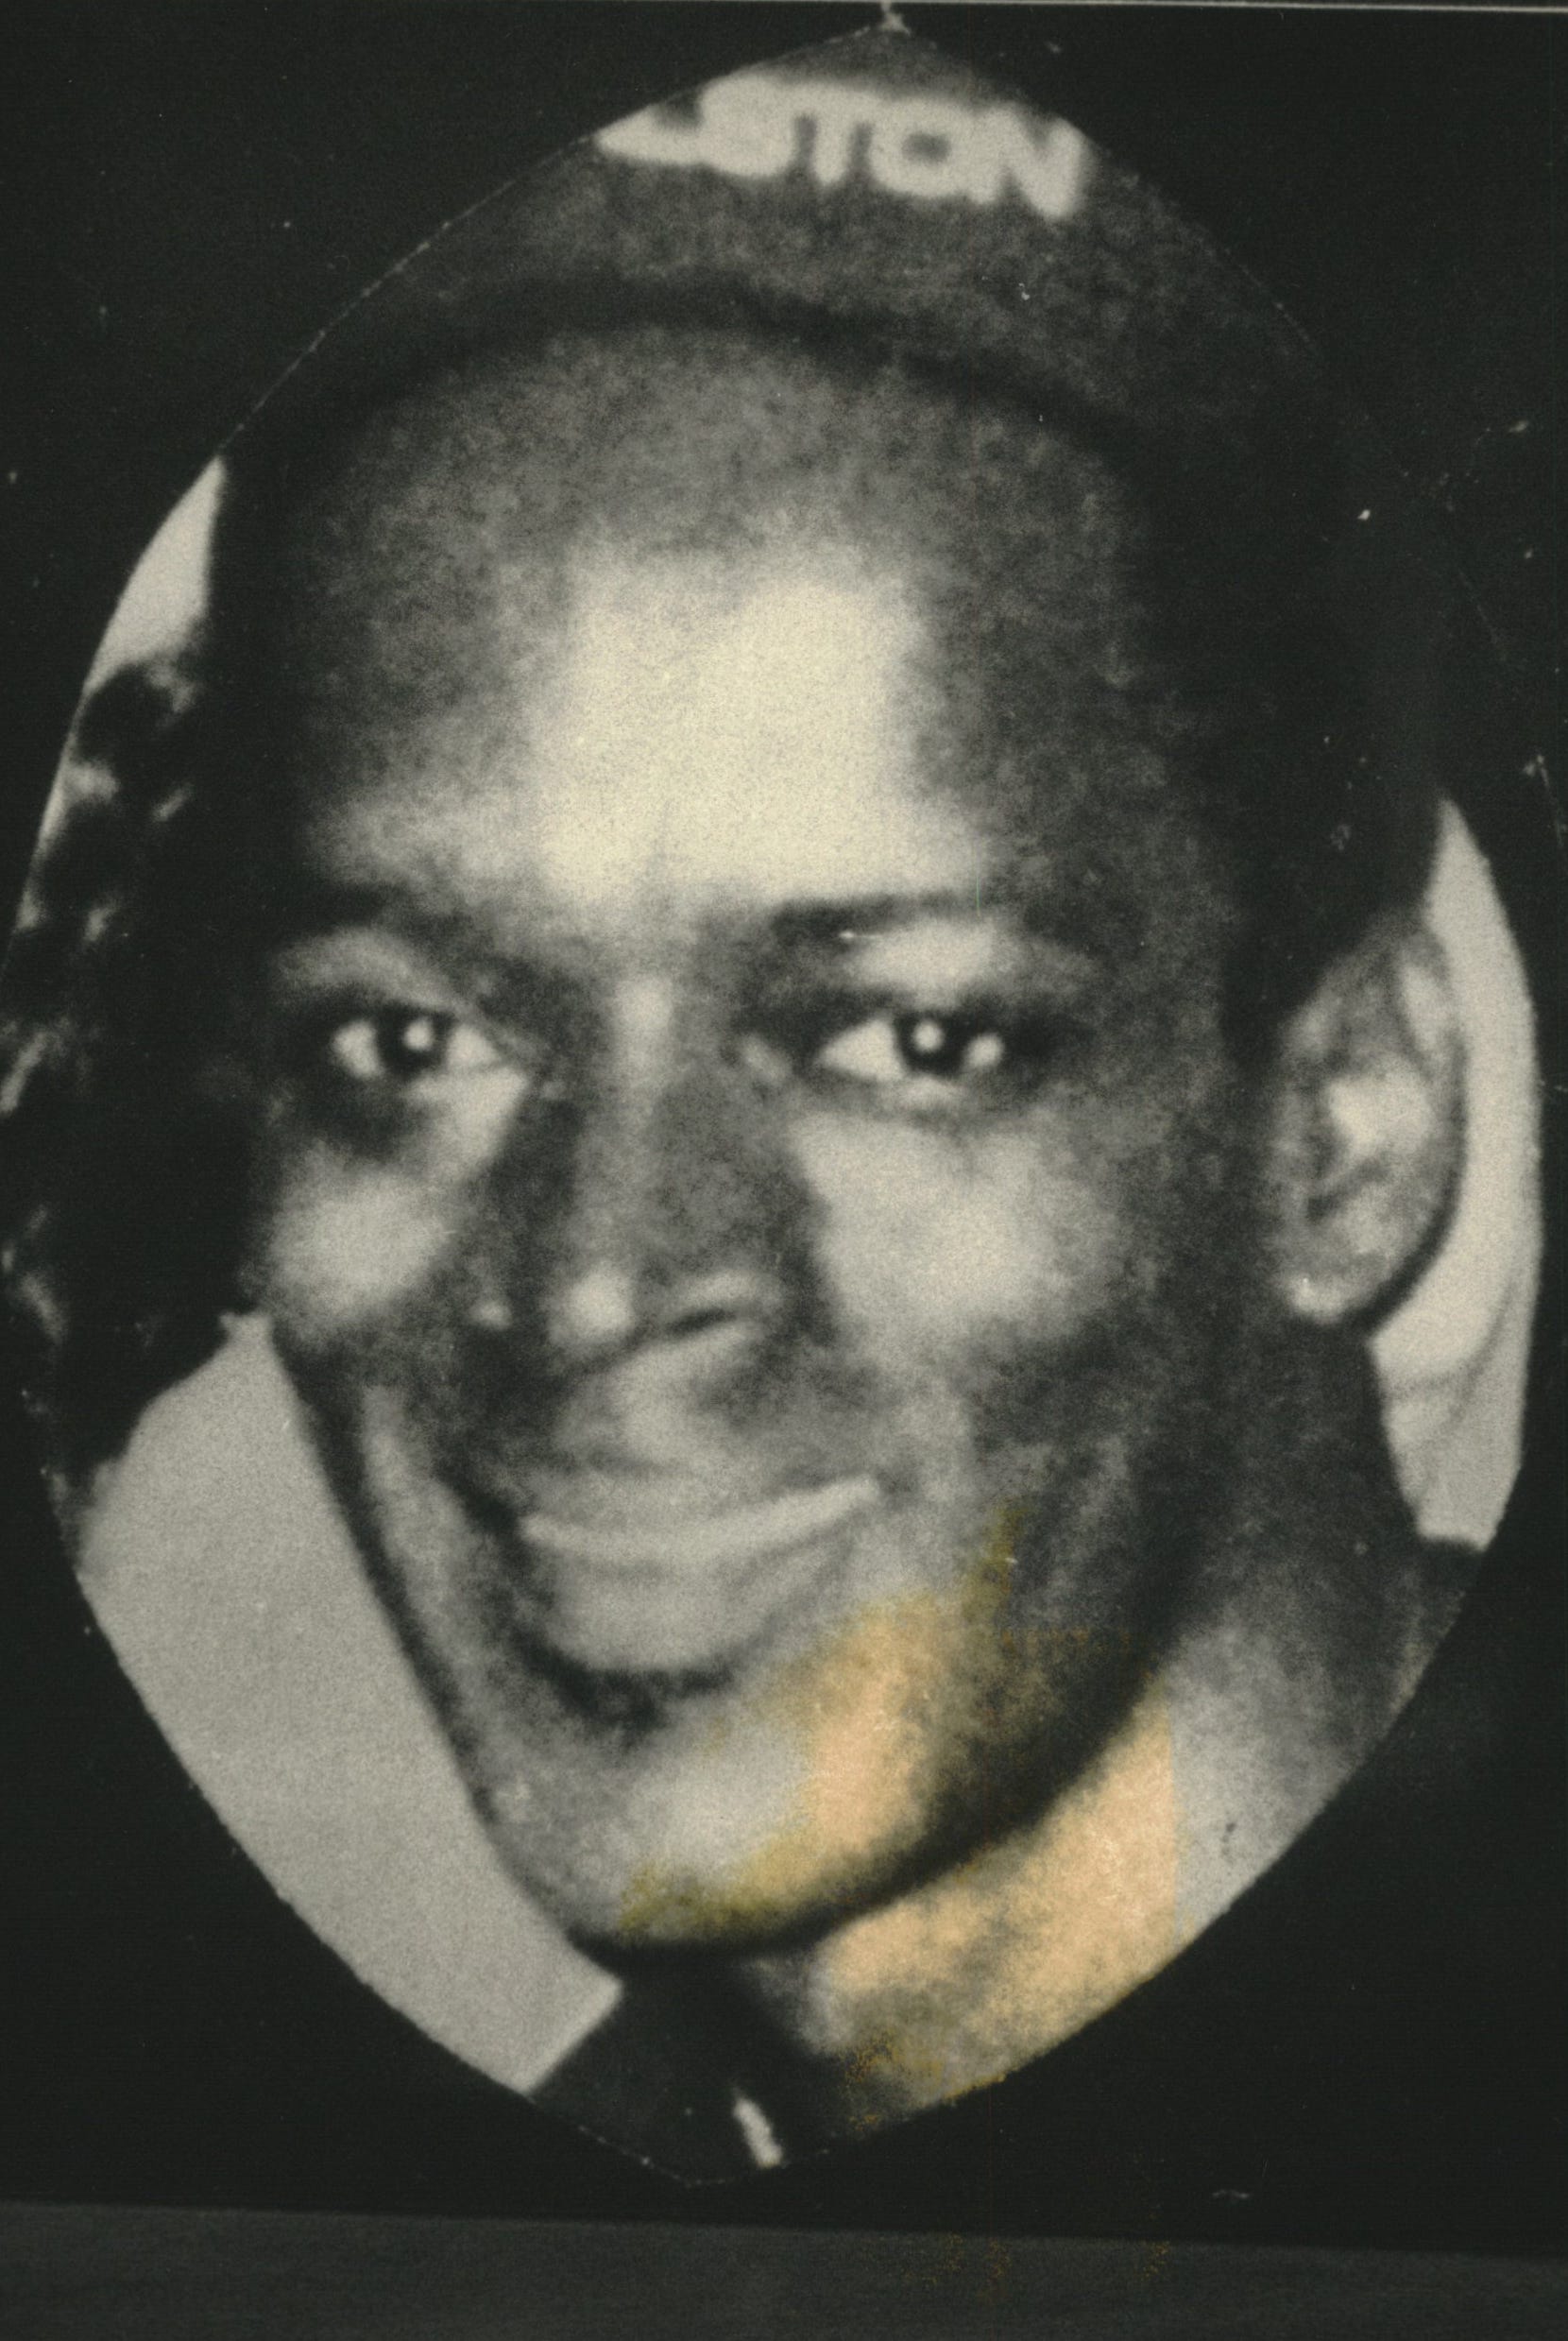 Tony Hughes, one of Jeffrey L. Dahmer's victims.